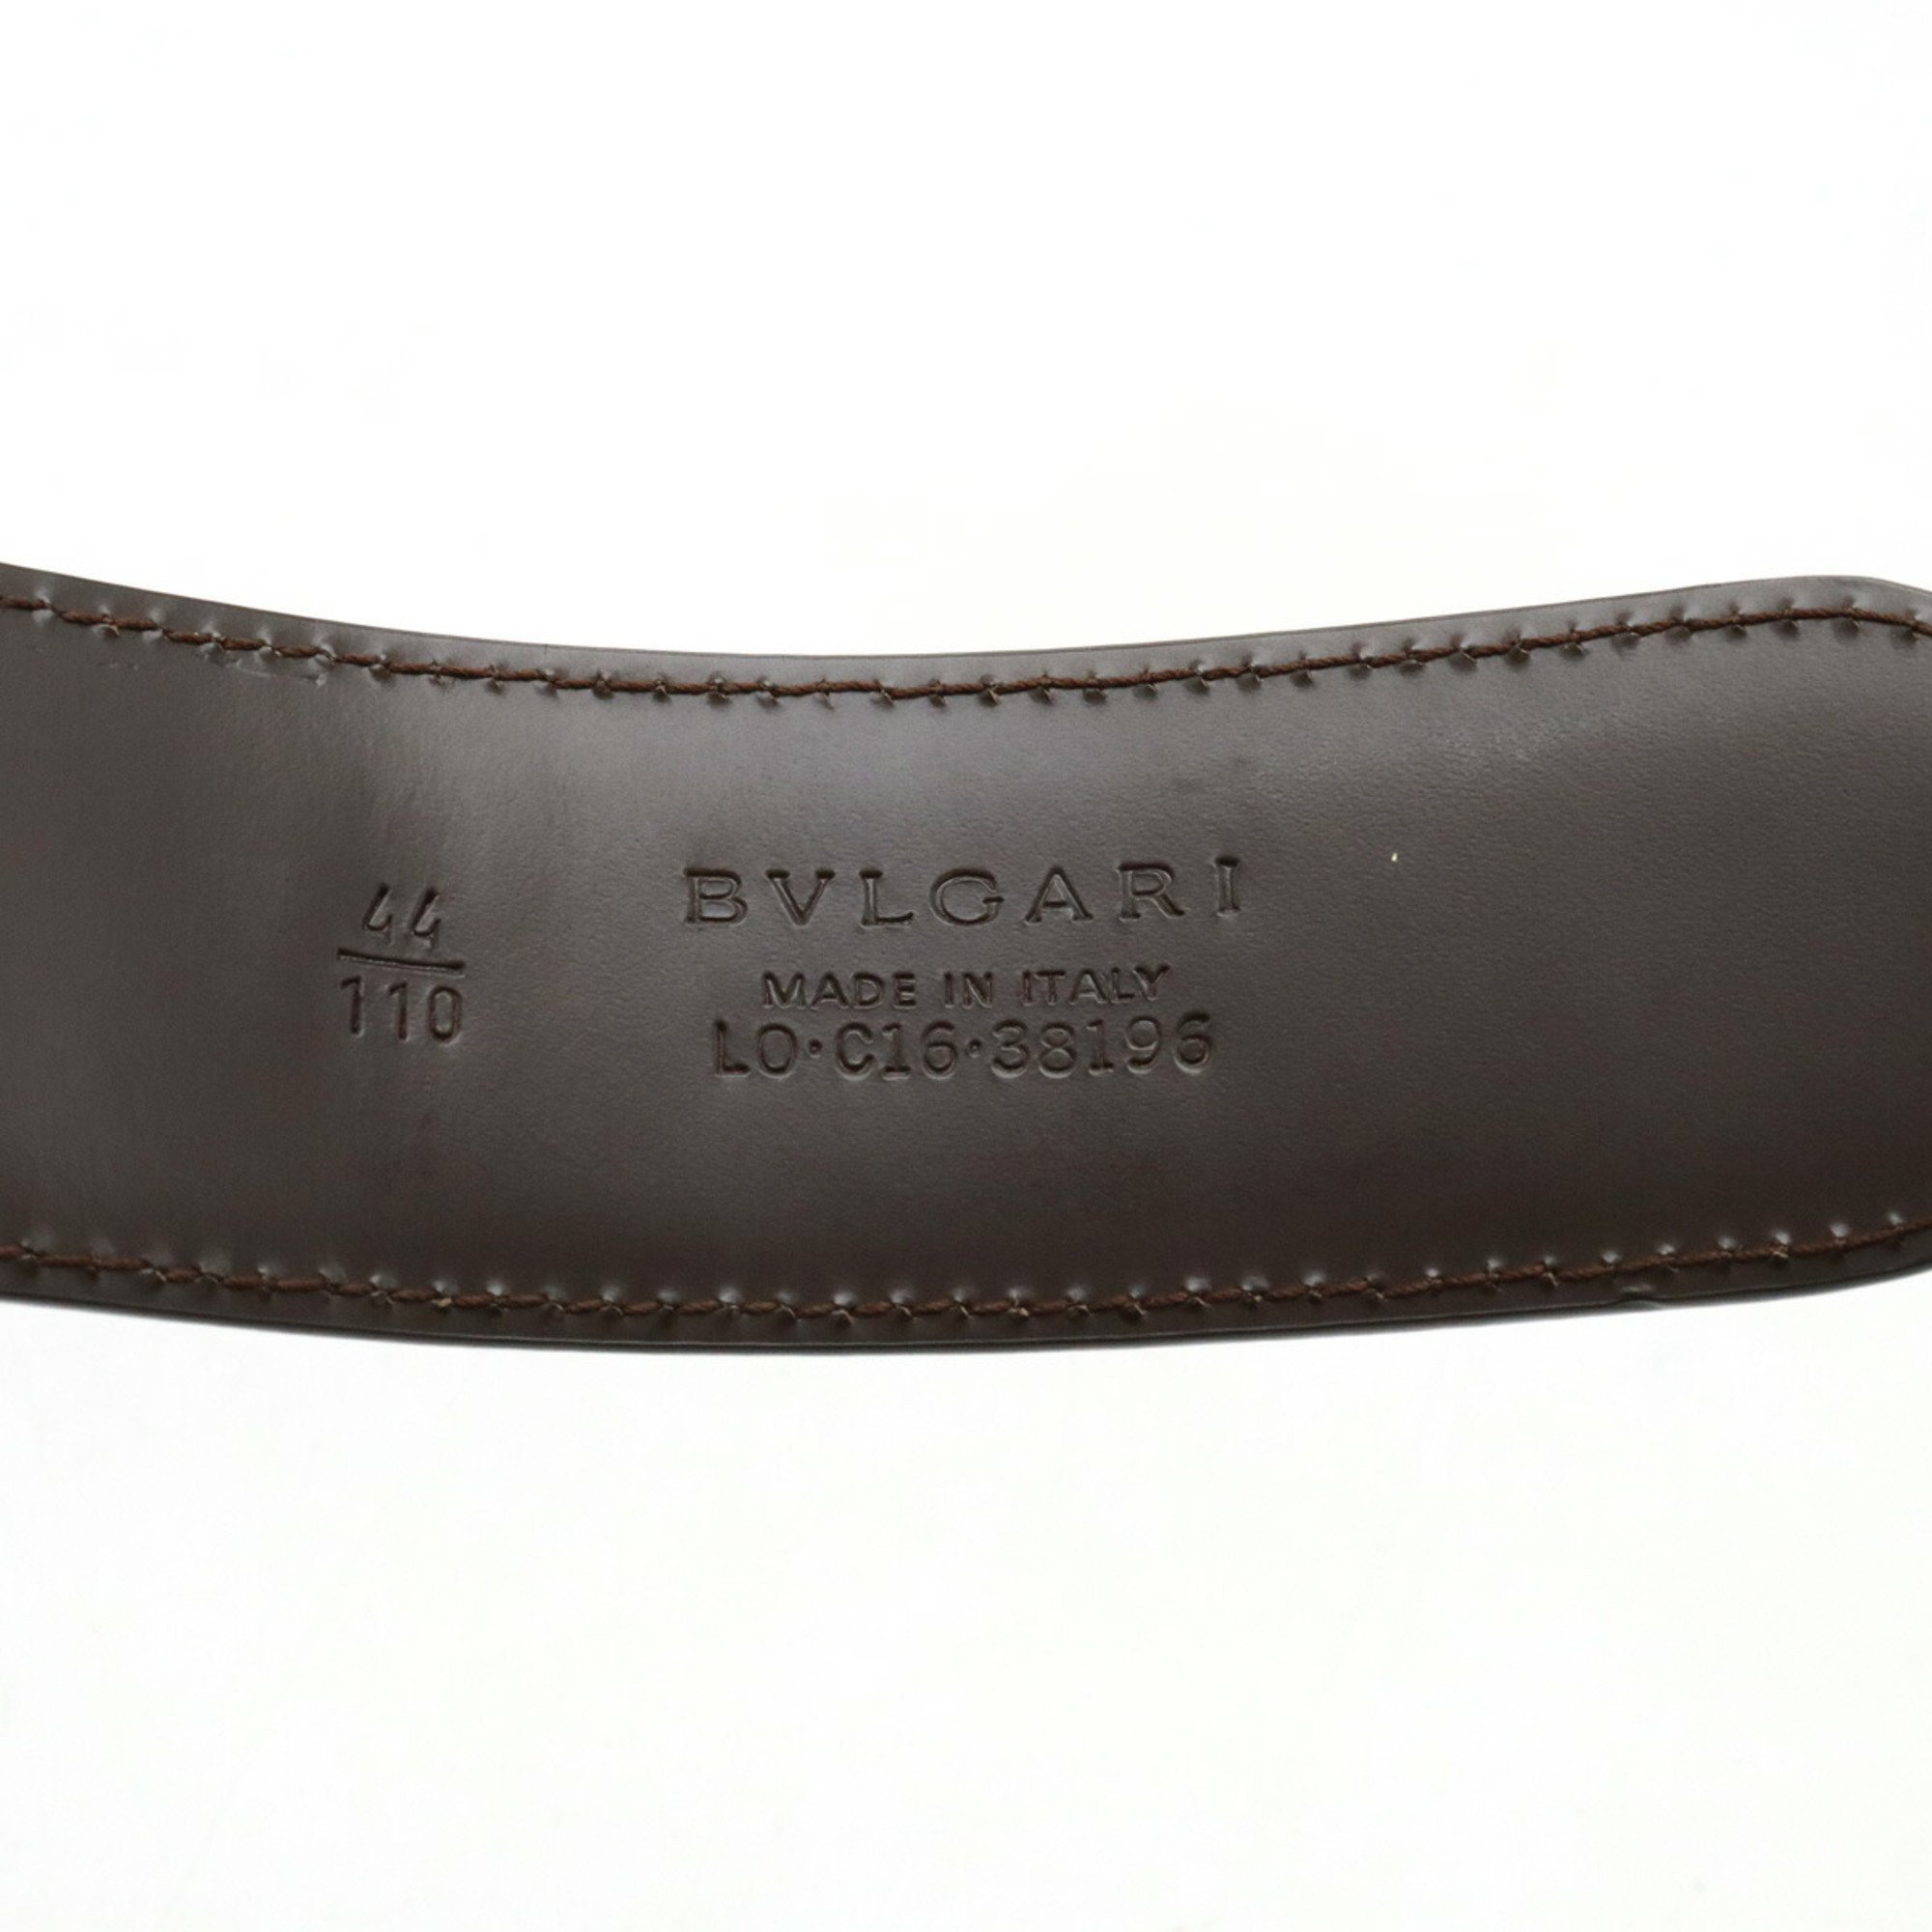 BVLGARI Bulgari Belt Round Buckle Leather Dark Brown Size 44/110 Actual 91cm Cut 20230